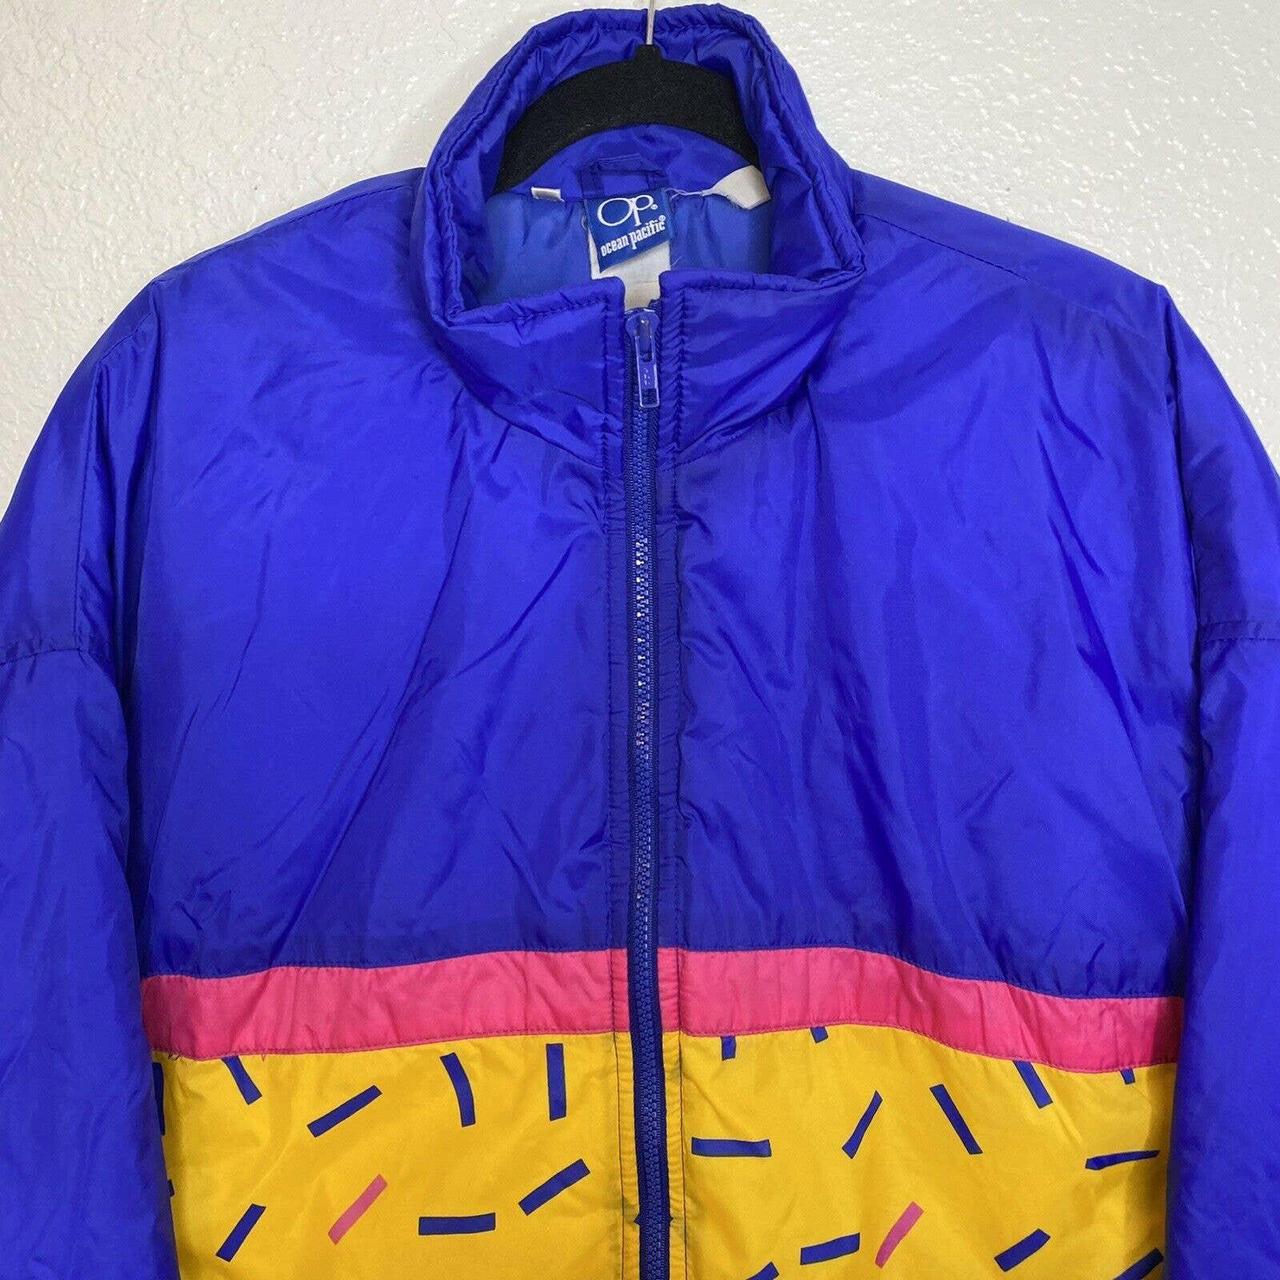 Vintage OP Ocean Pacific Puffer Jacket Coat size XL... - Depop